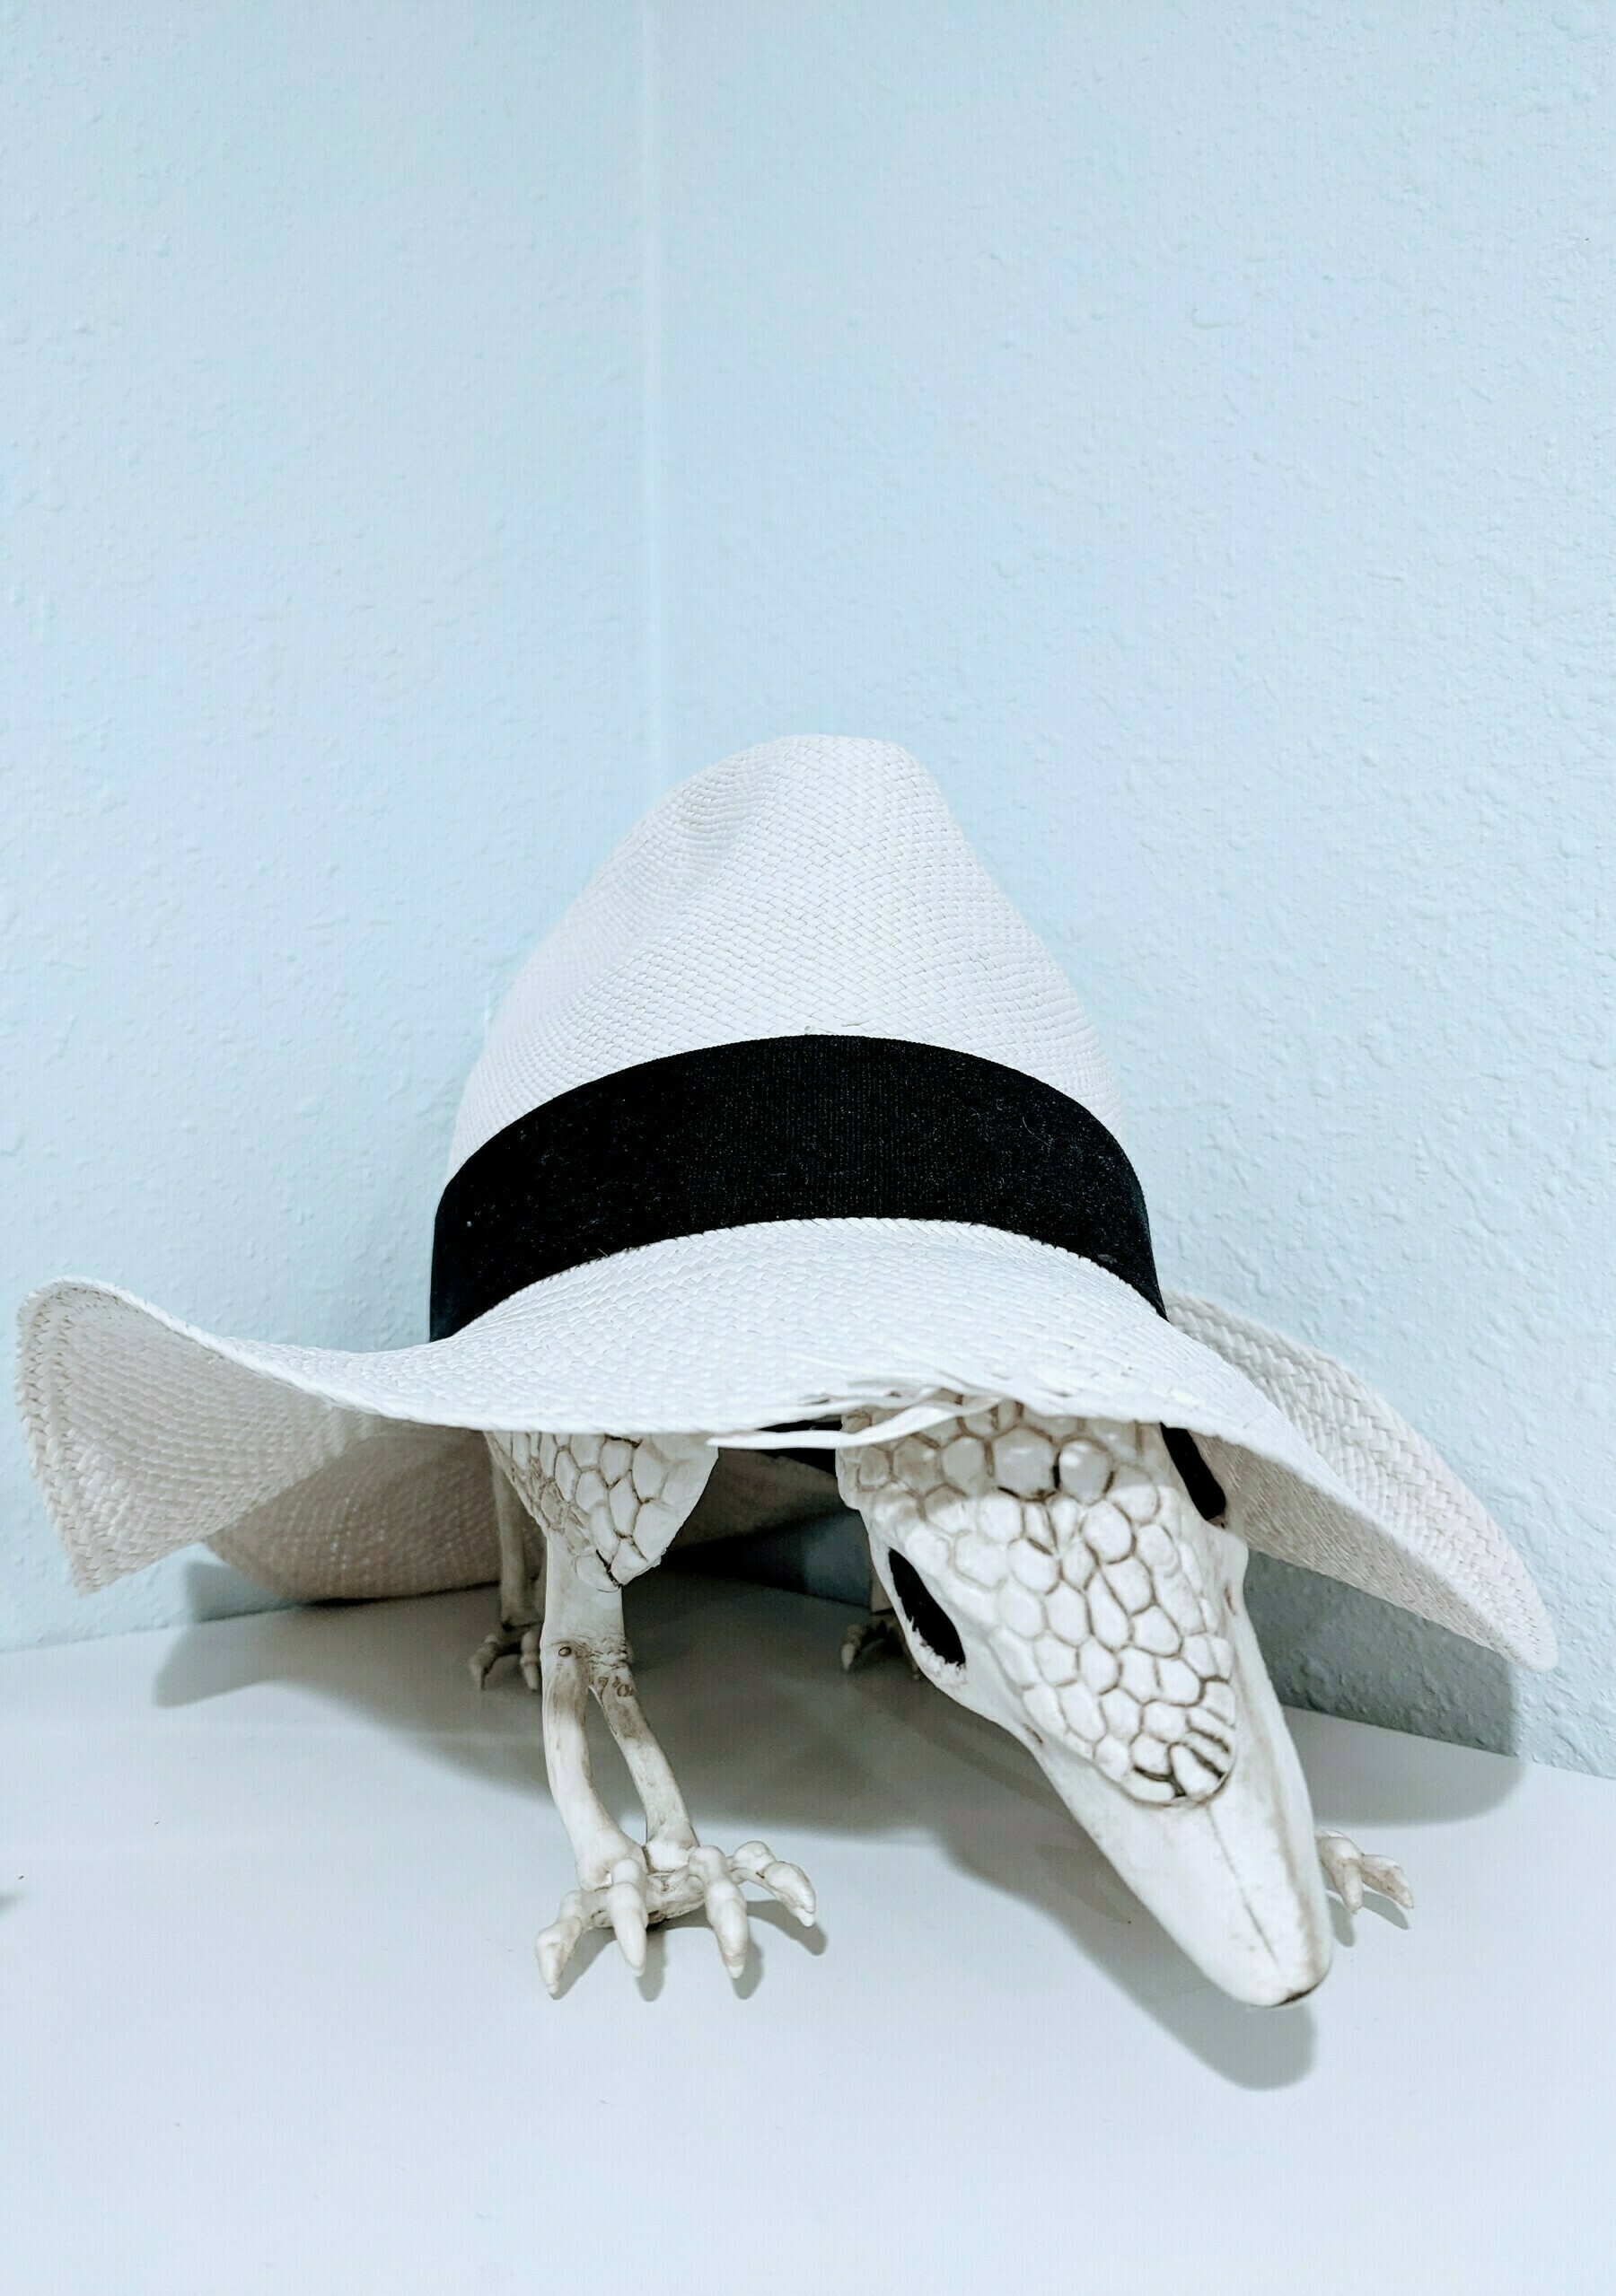 A Panama hat resting on a plastic facsimile of an armadillo skeleton 